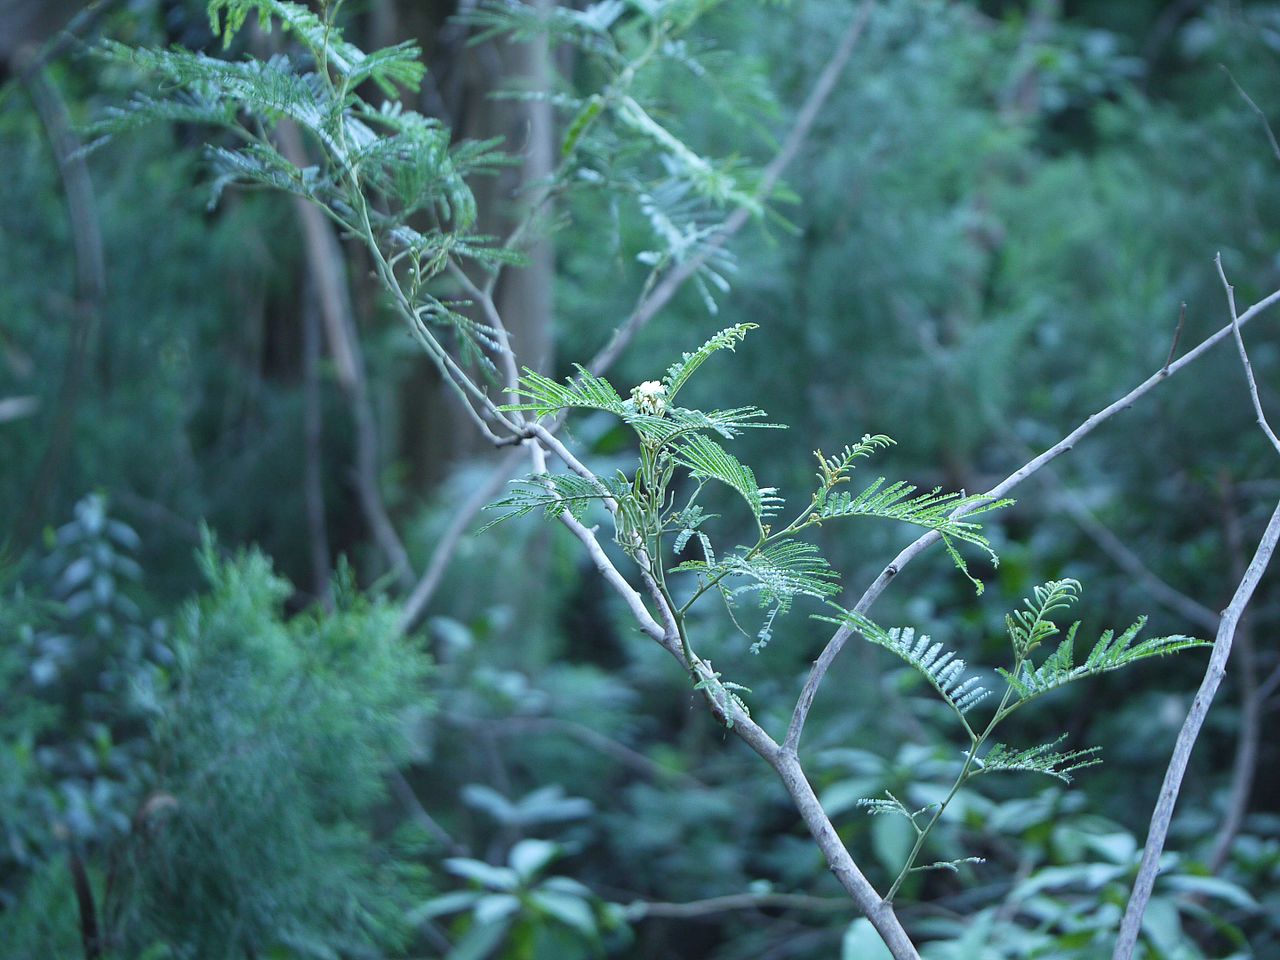 Black wattle, an invasive plant native to Australia (Image Source: Dinesh Valke from Thane, India via Wikimedia Commons)